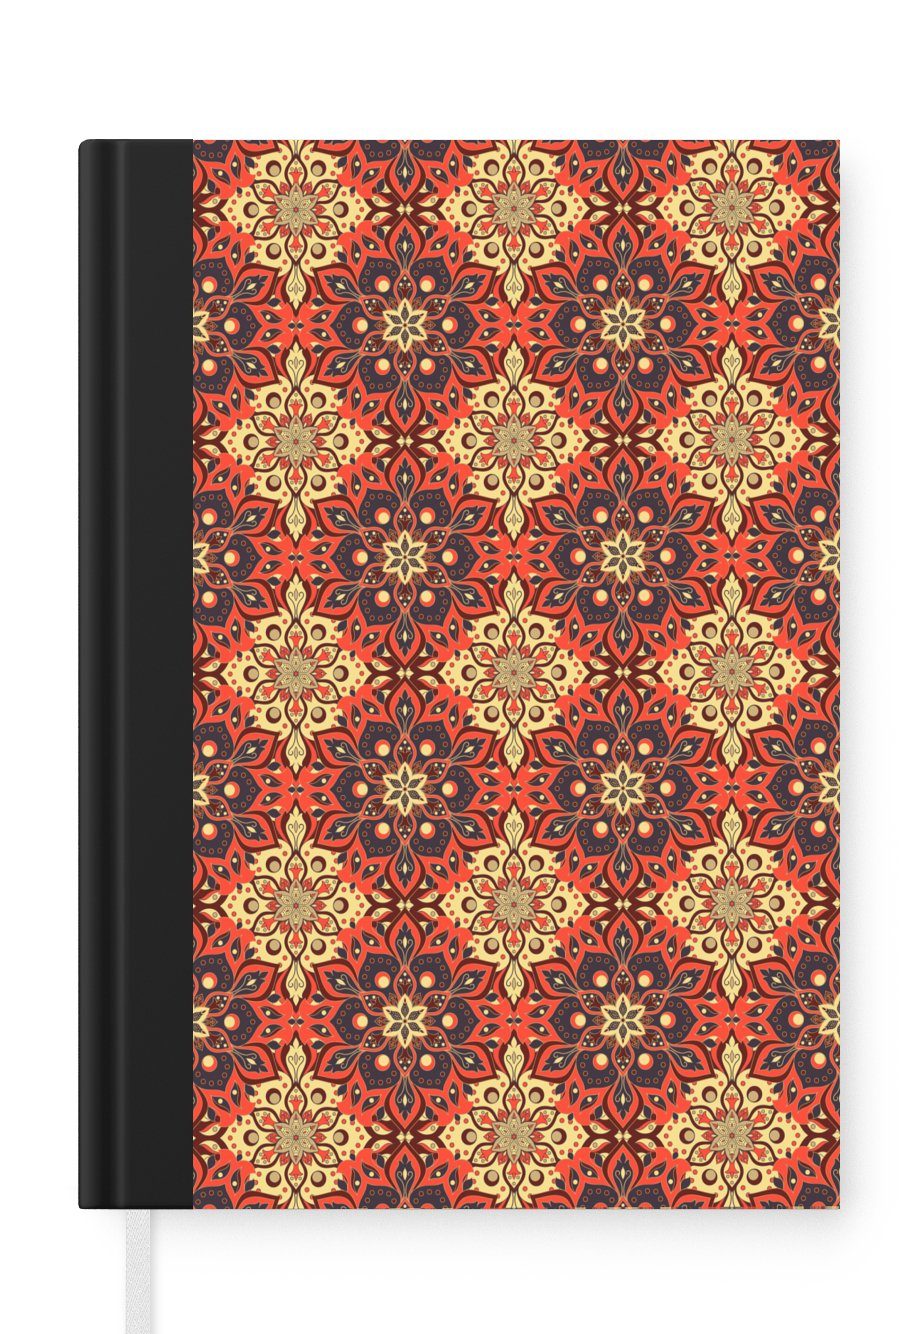 MuchoWow Notizbuch Mandala - Blumen - Boho - Muster, Journal, Merkzettel, Tagebuch, Notizheft, A5, 98 Seiten, Haushaltsbuch